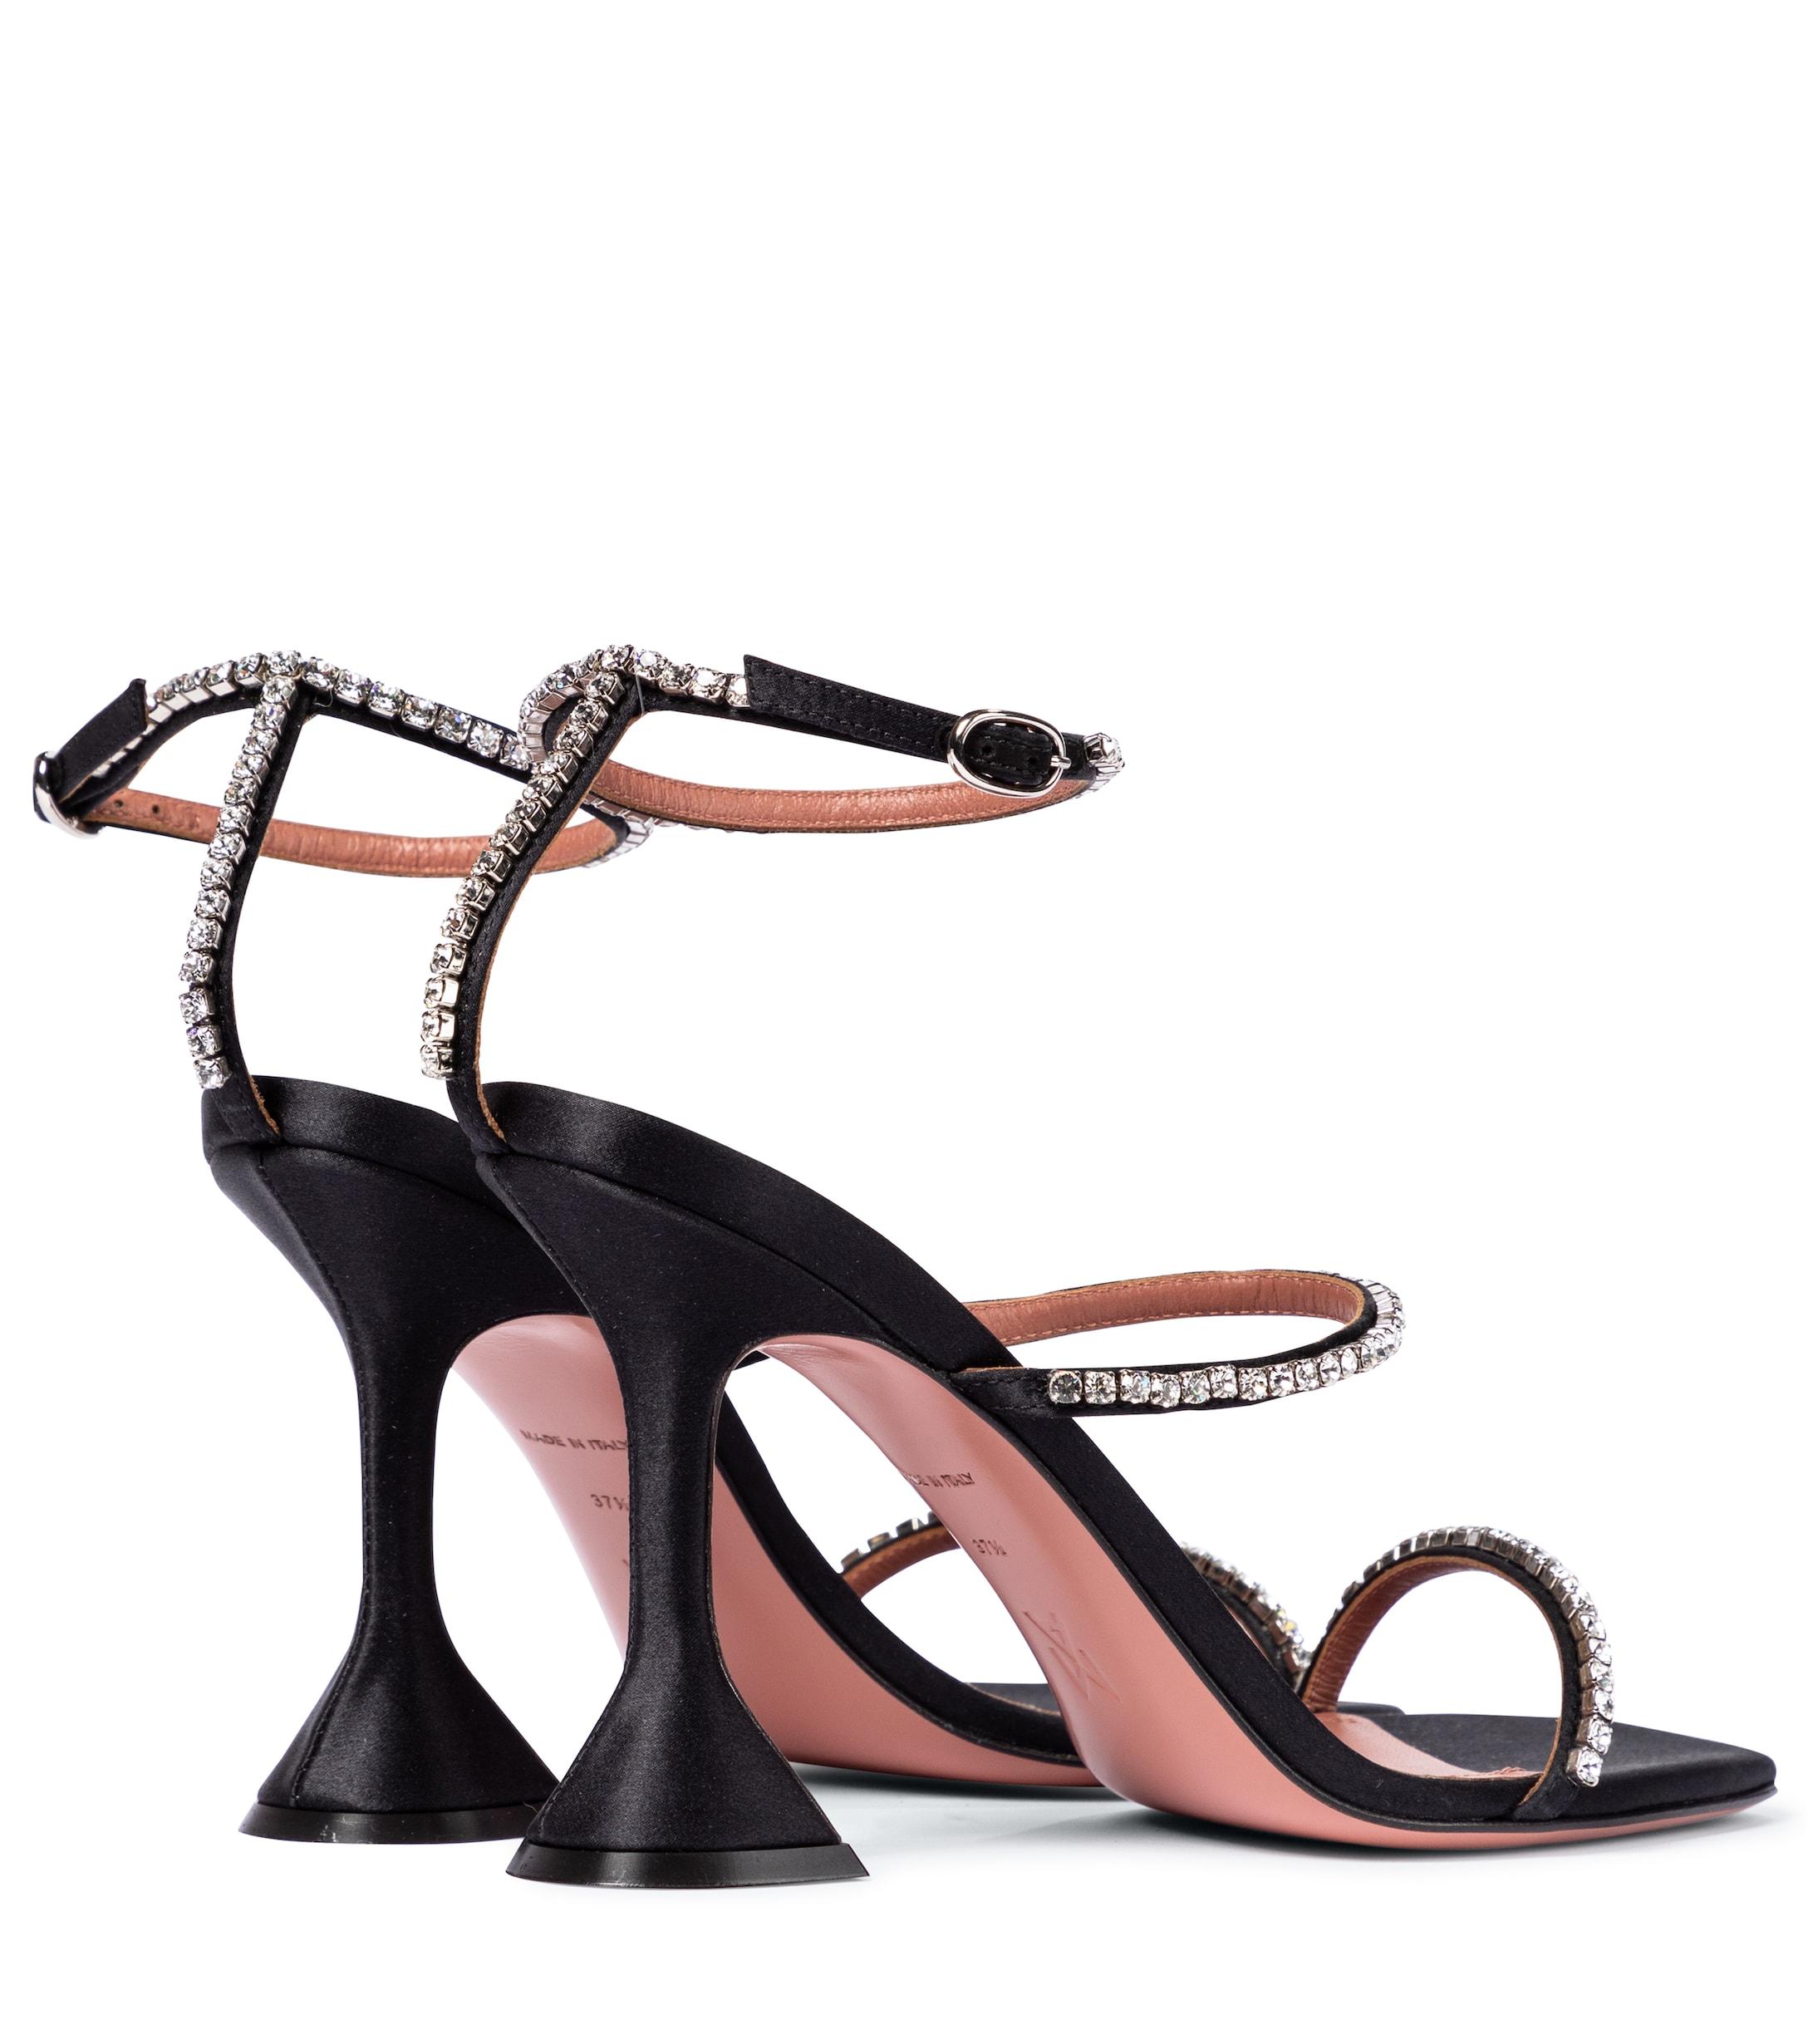 AMINA MUADDI Gilda Embellished Satin Sandals in Black - Save 12% - Lyst